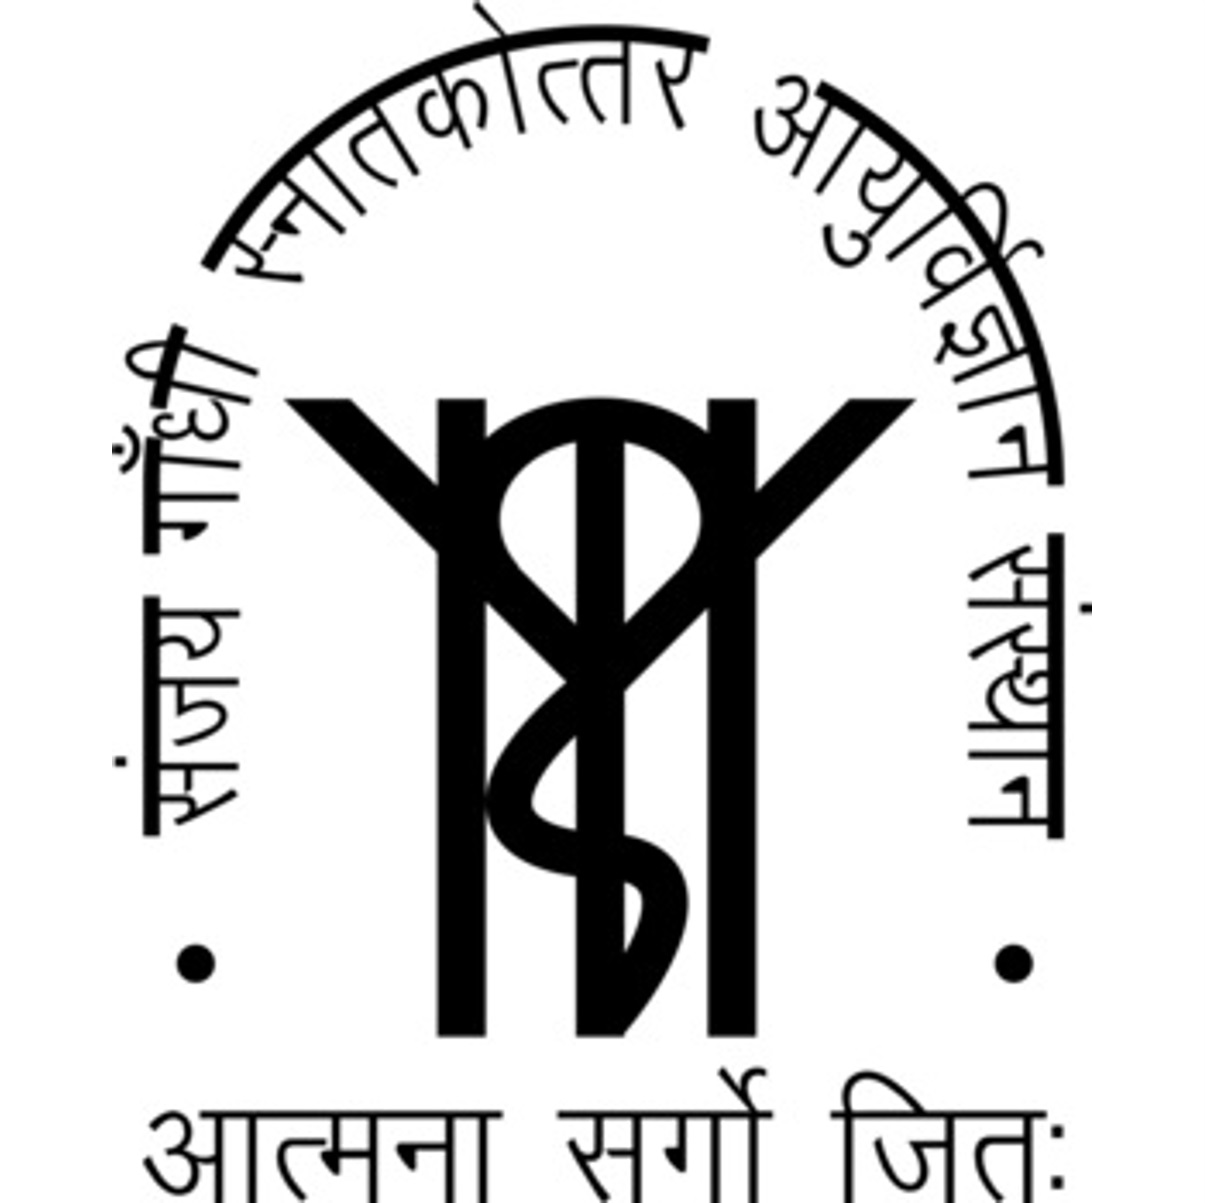 Sanjay Gandhi Post Graduate Institute of Medical Sciences